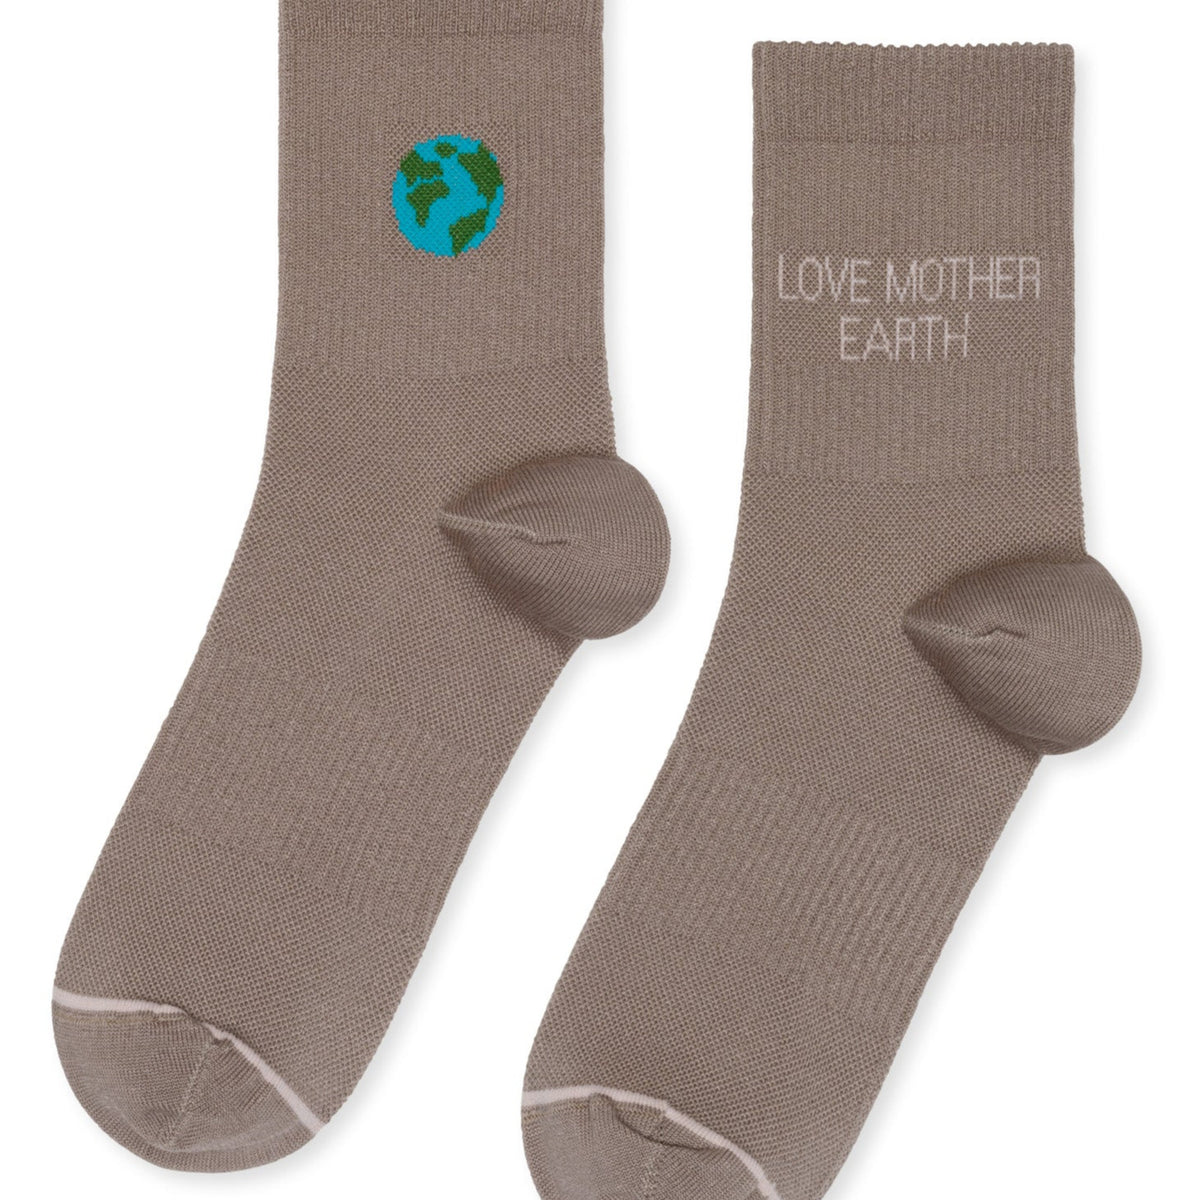 Love Mother Earth -Crew Socks